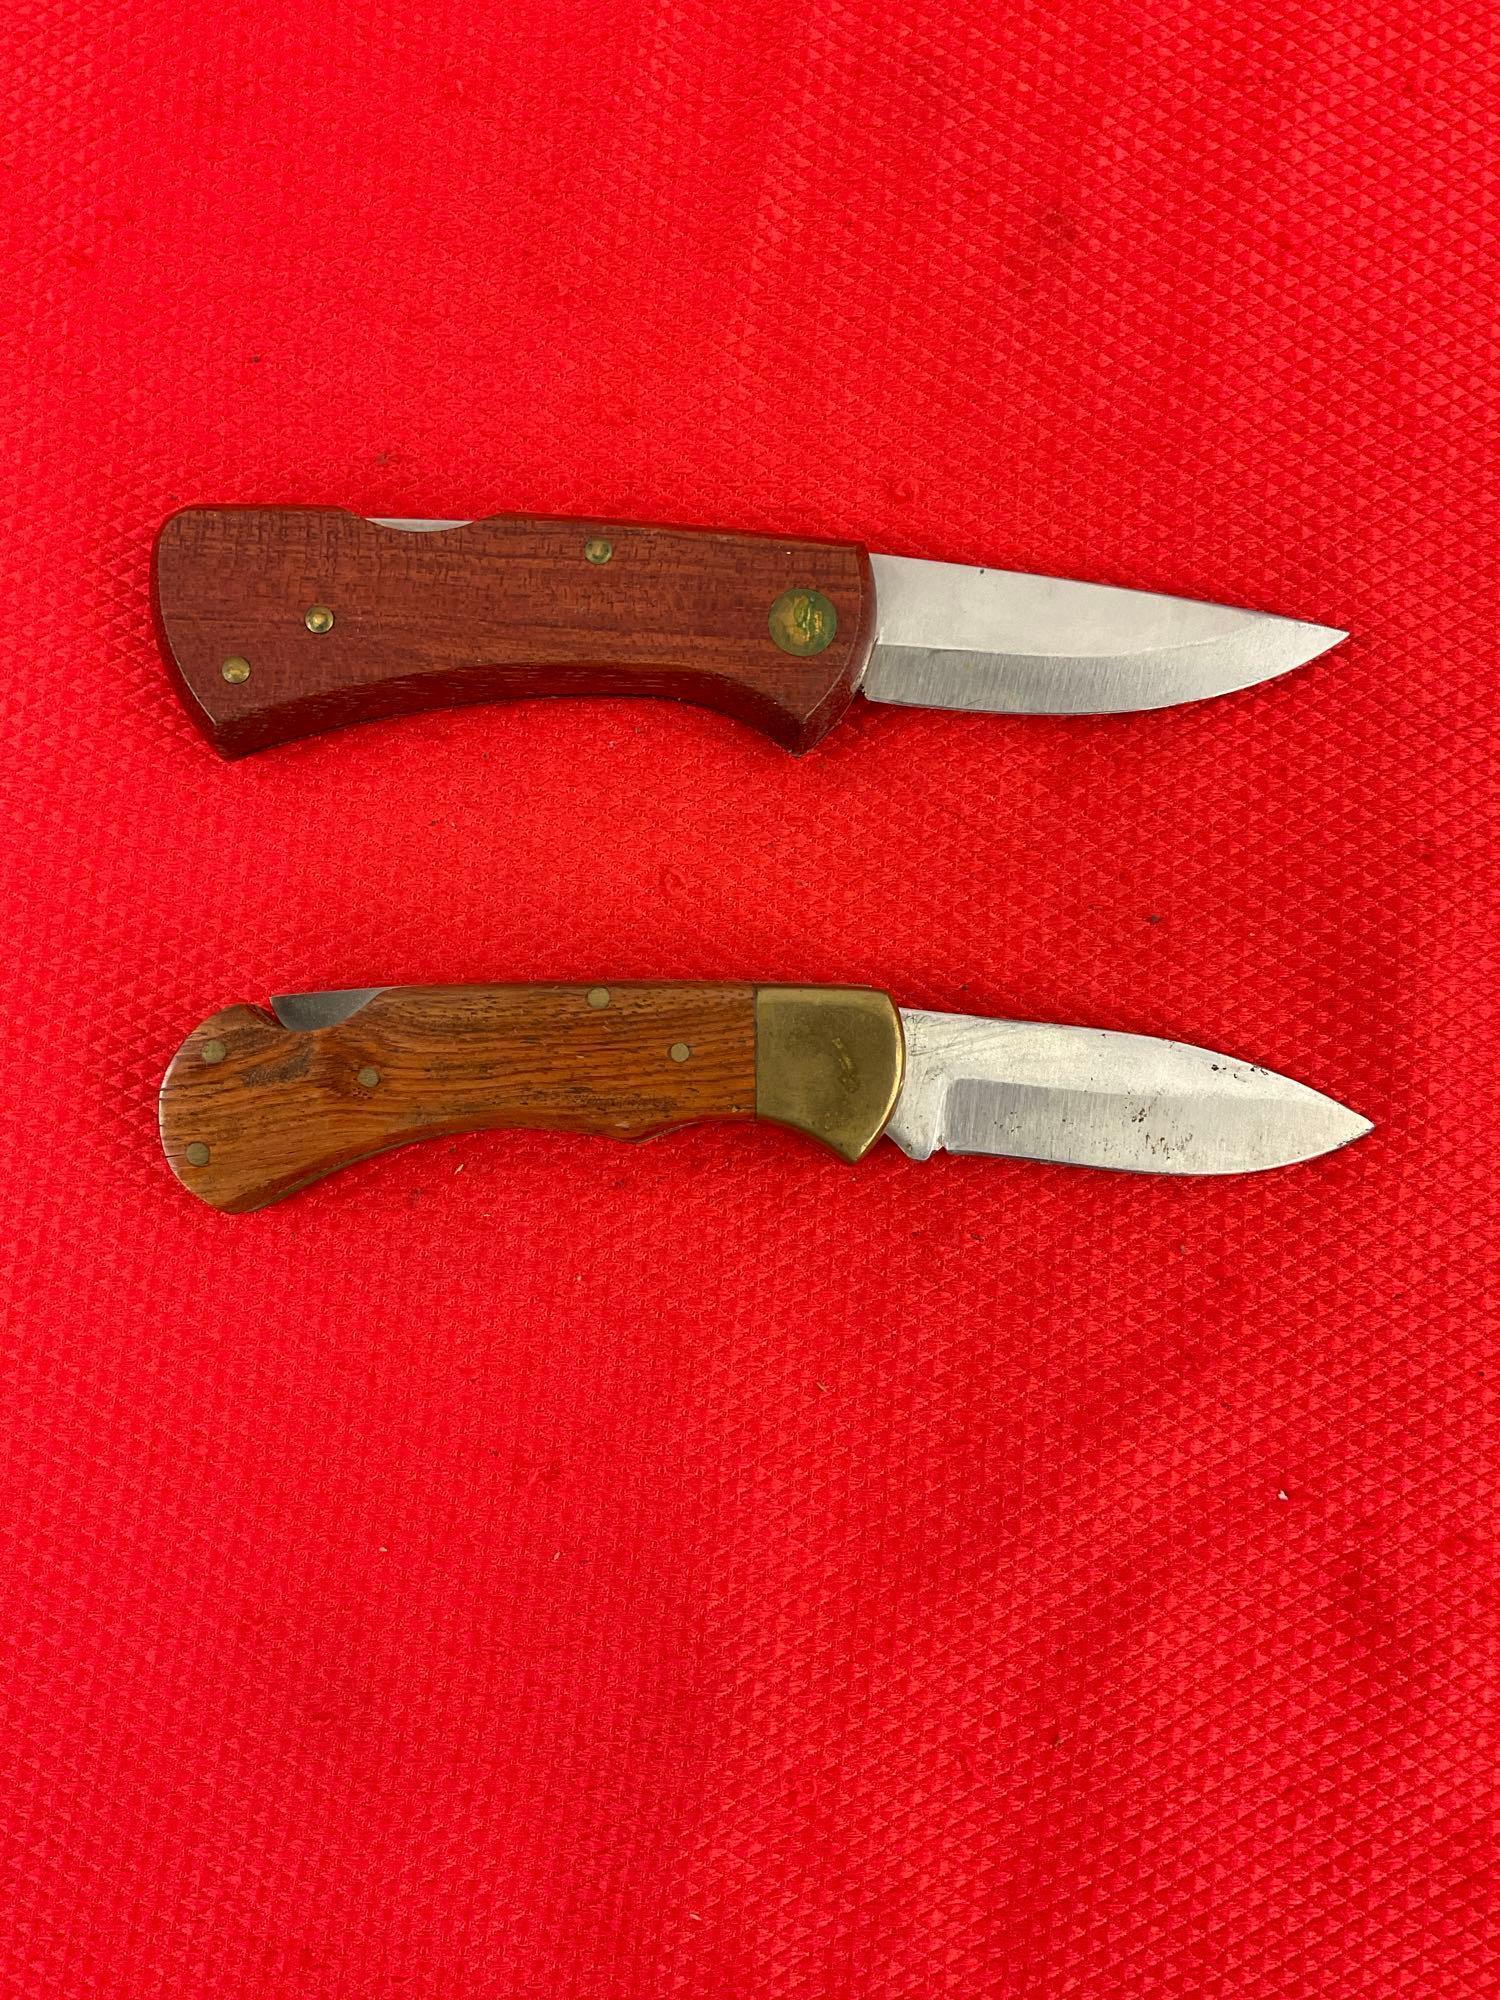 2 pcs Steel Folding Blade Pocket Knives w/ Wood Handles & Sheathes. Vintage Estwing EKA. See pics.